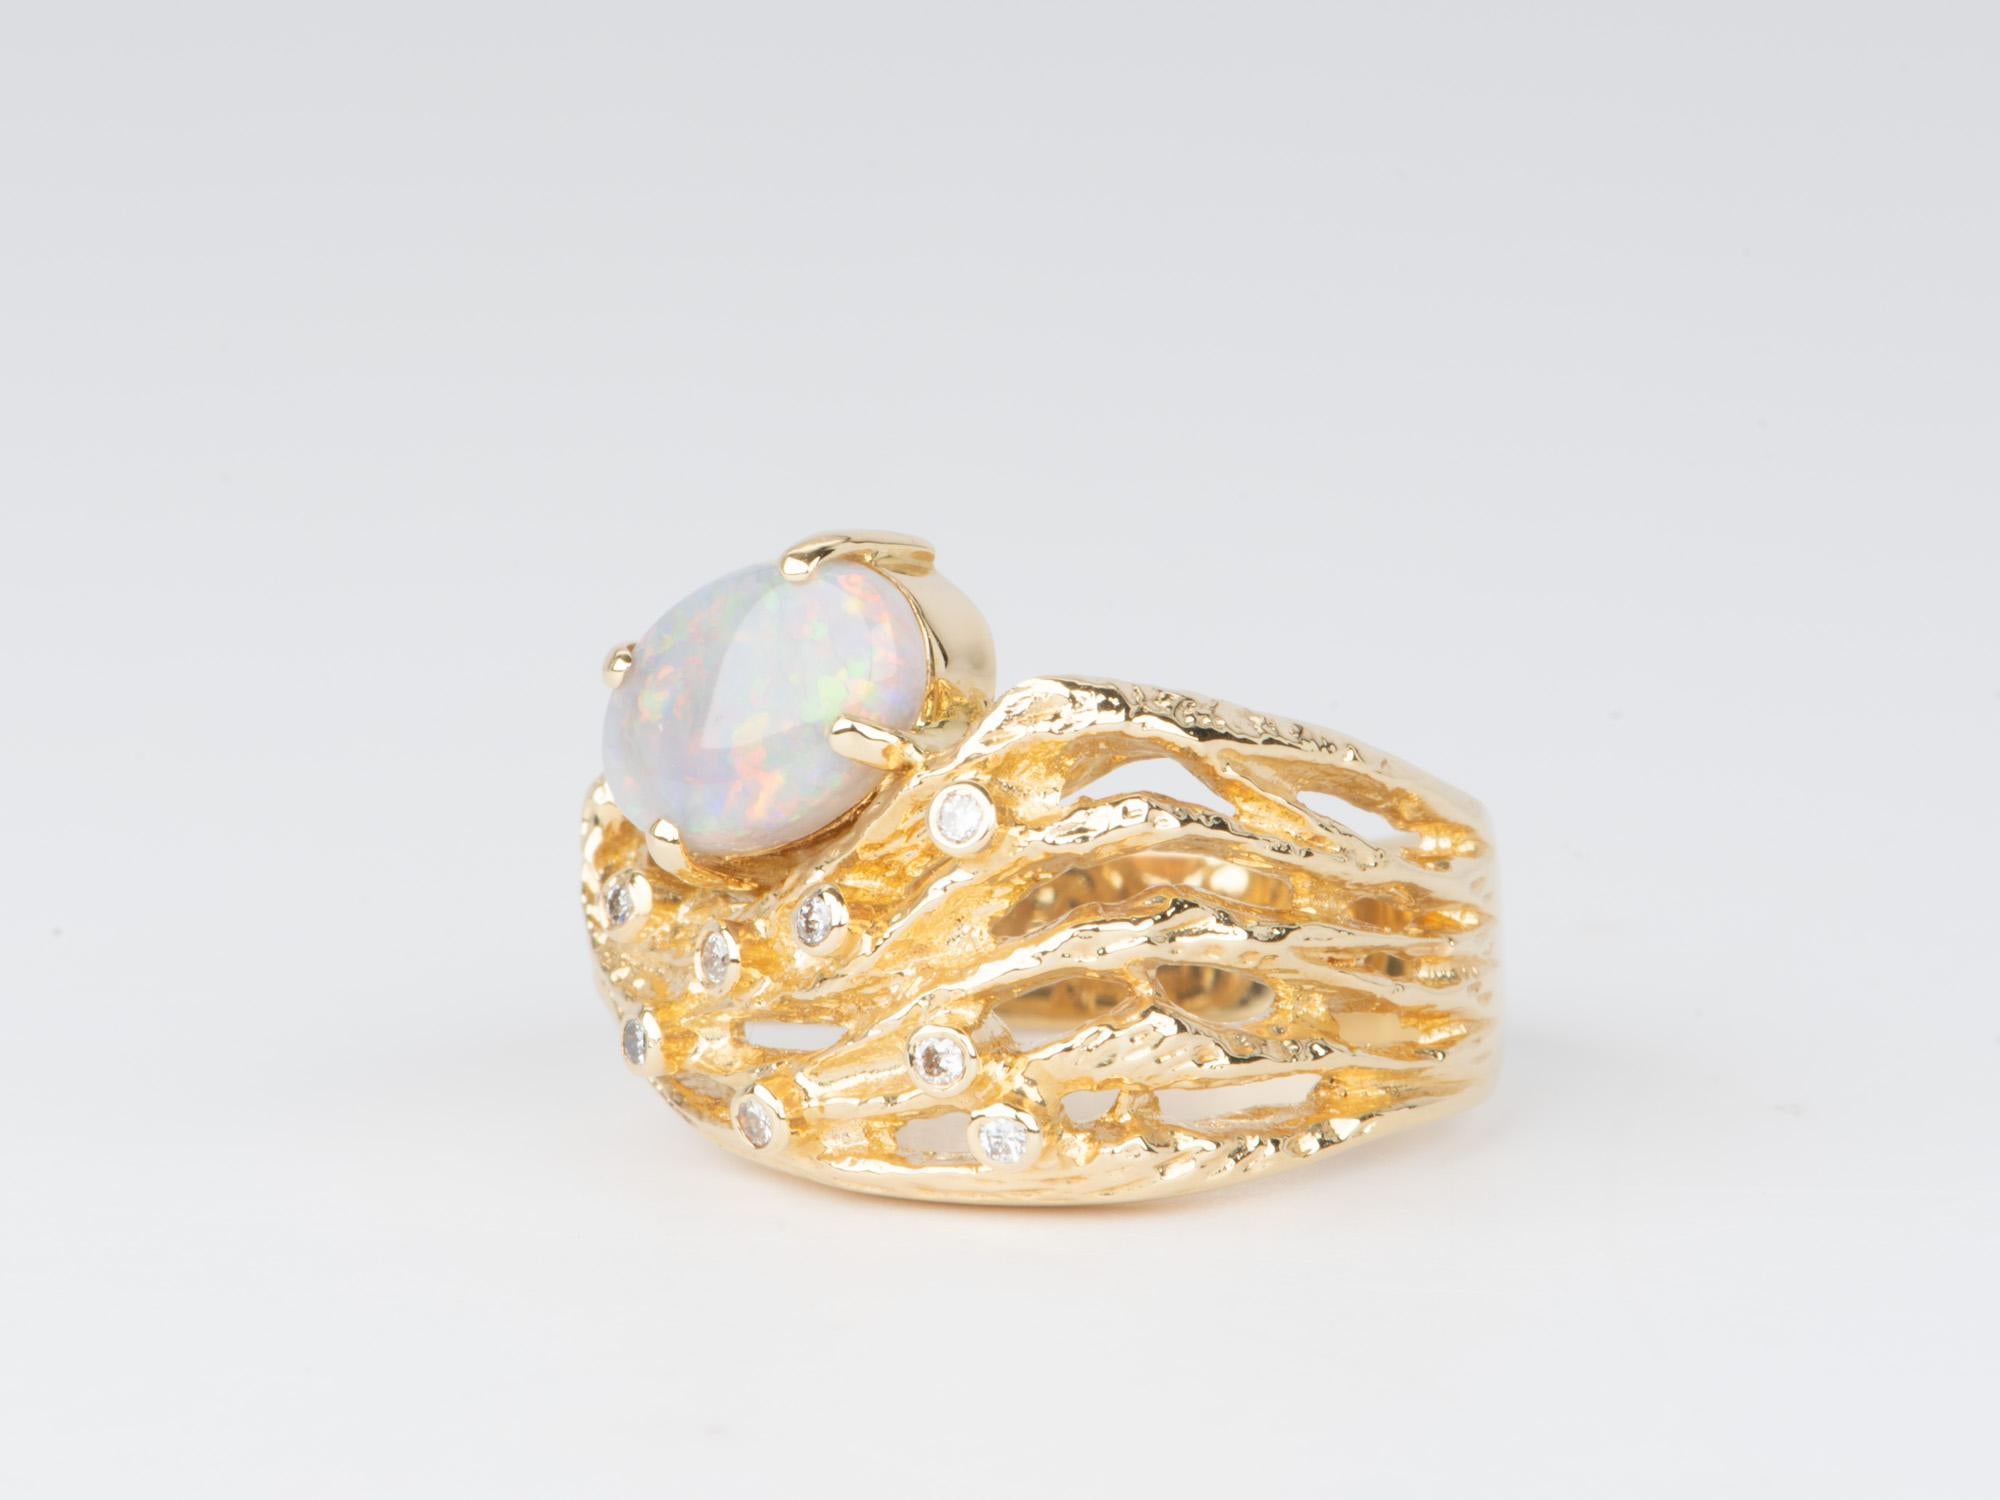 Uncut Solid Australian Opal Modernist Design 18K Gold Chunky Ring V1118 For Sale